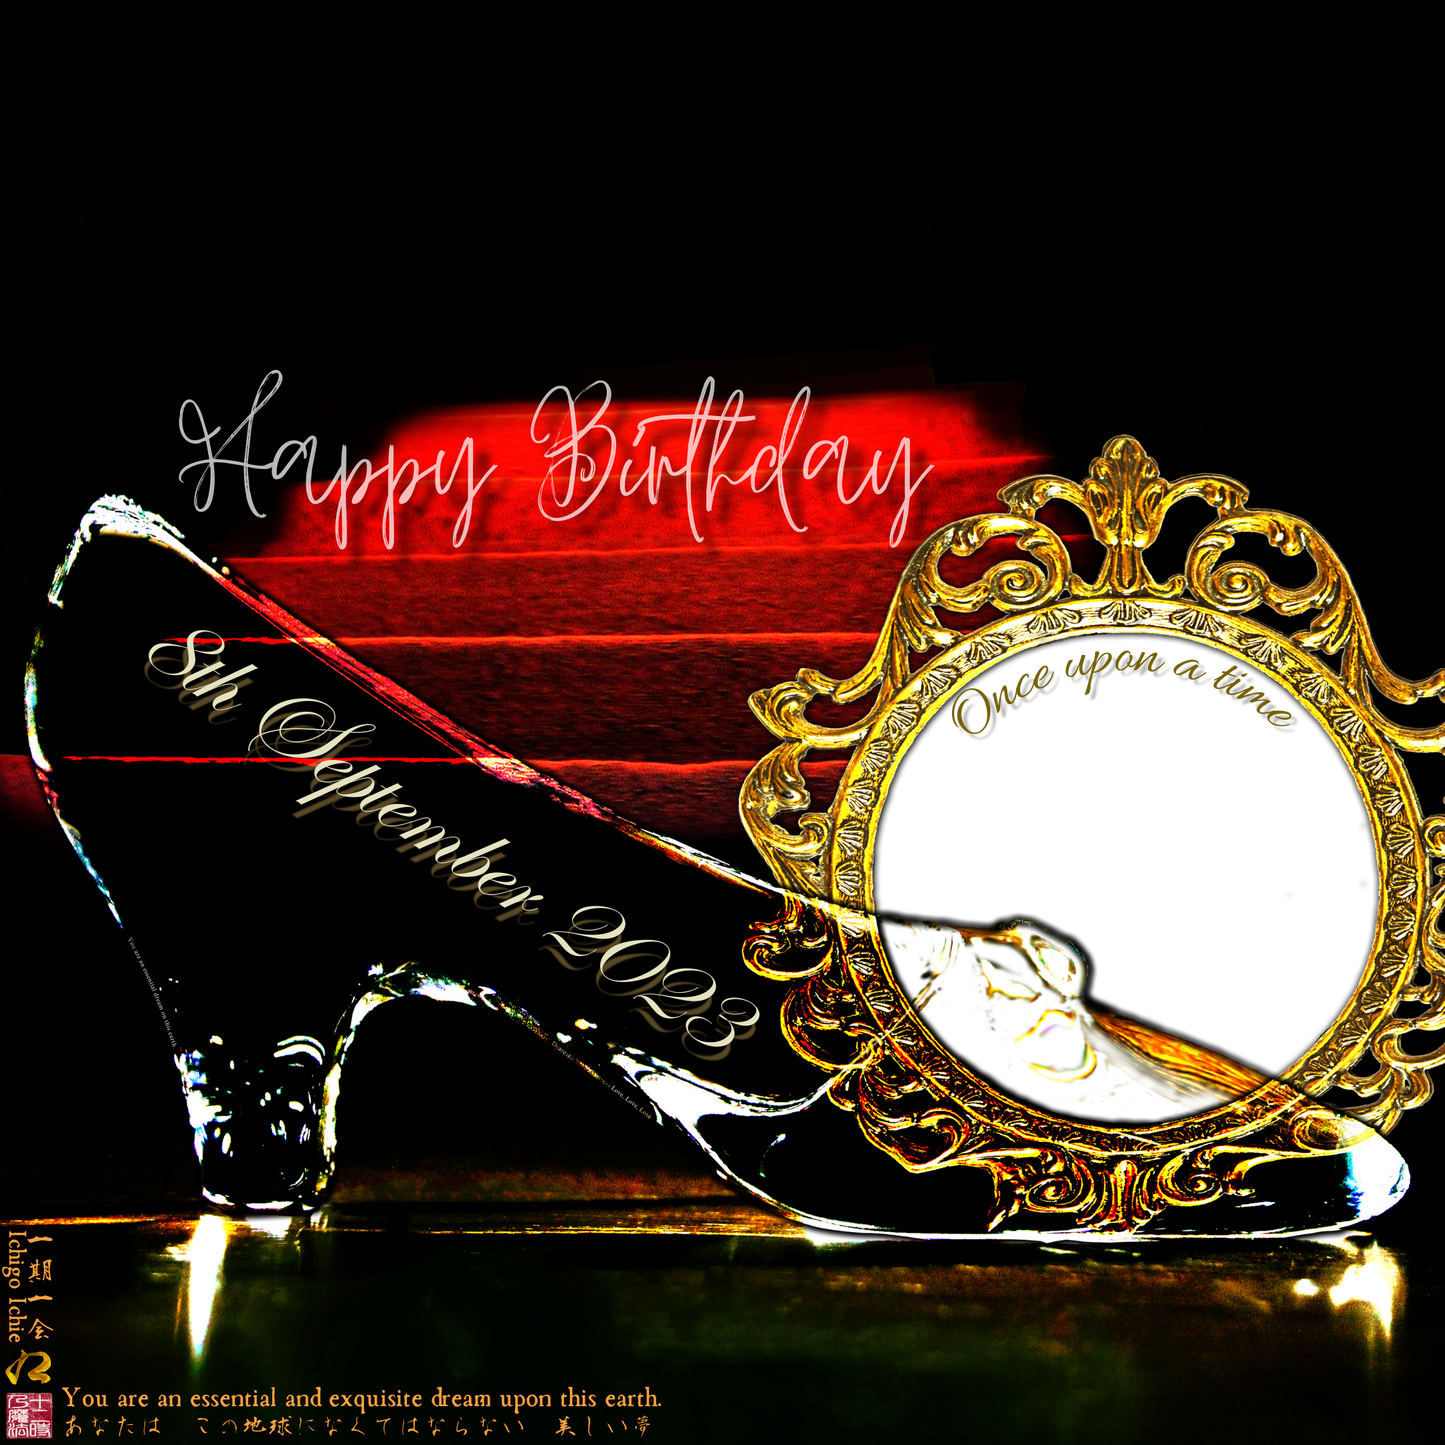 Happy Birthday Glass Slipper "Ichigo Ichie" 8th September 2023 the Right (1-of-1) NFT Art